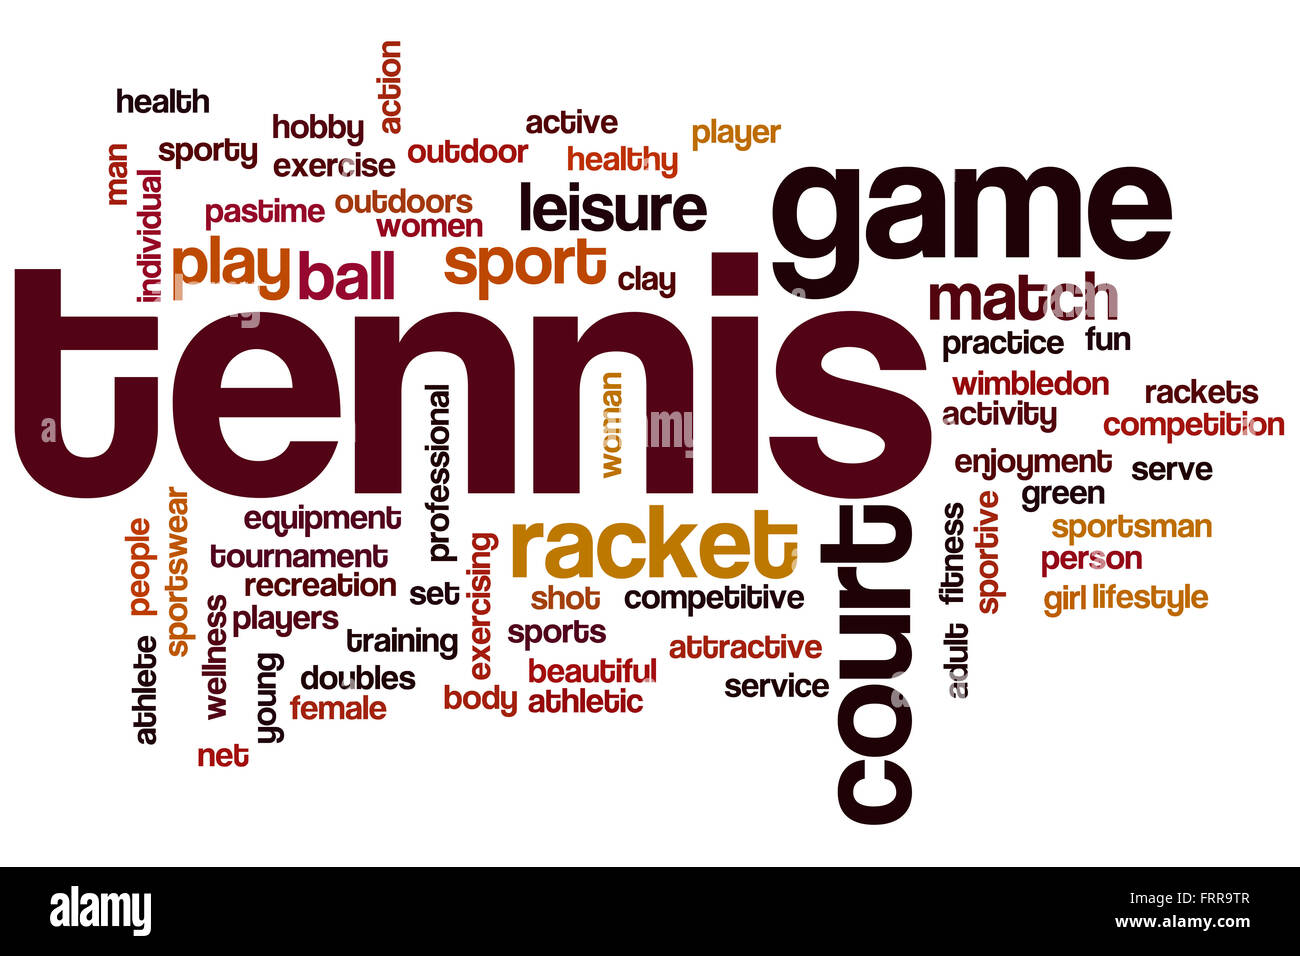 Tennis word cloud concept Stock Photo - Alamy